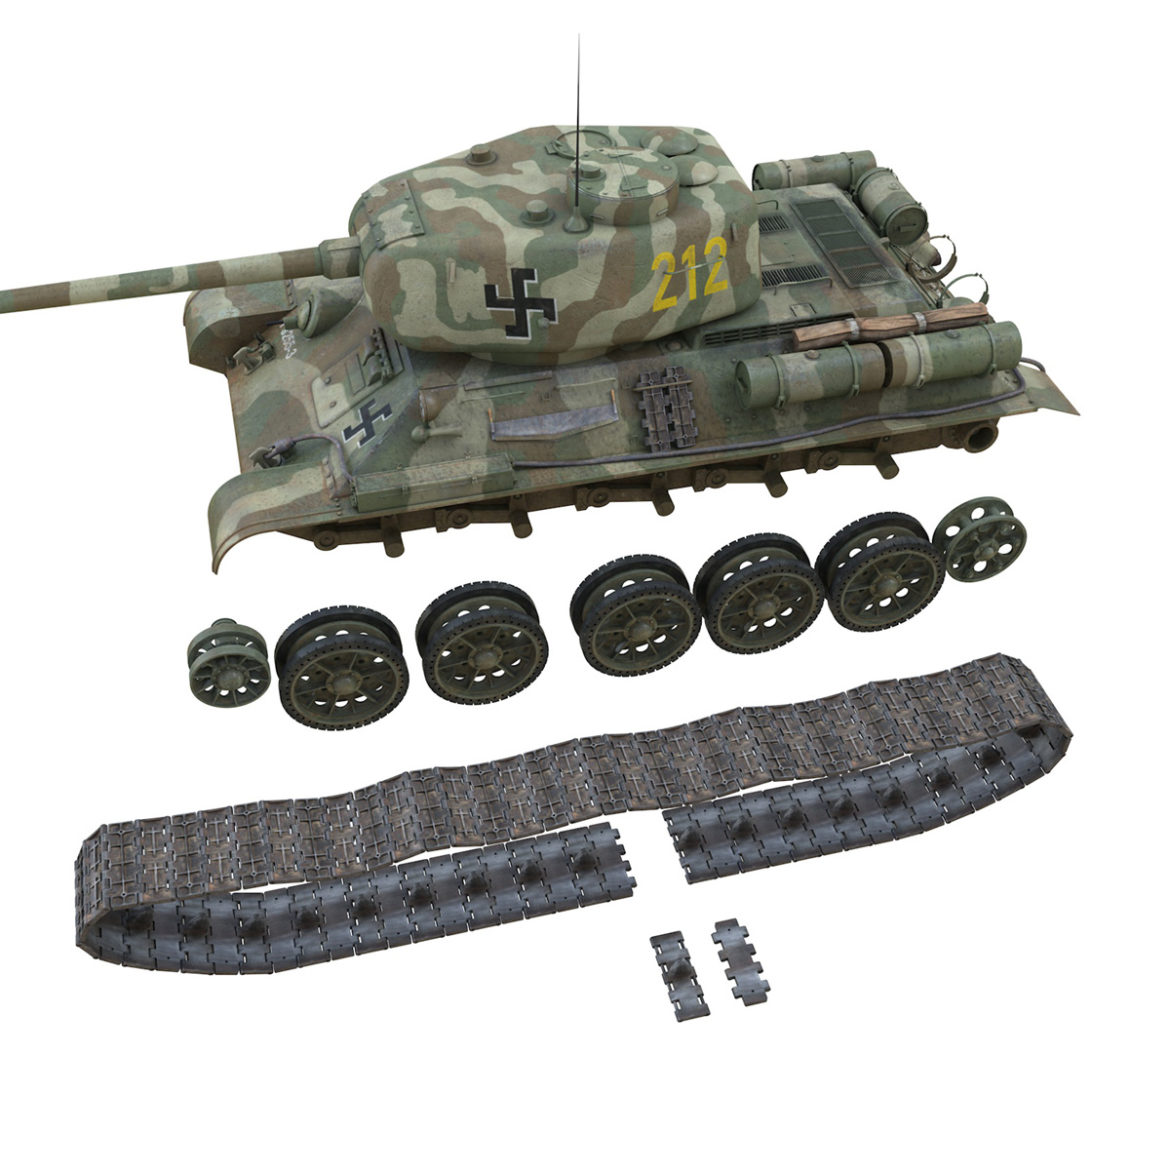 t-34-85 – 212 – finish army 3d model 3ds fbx c4d lwo obj 314645